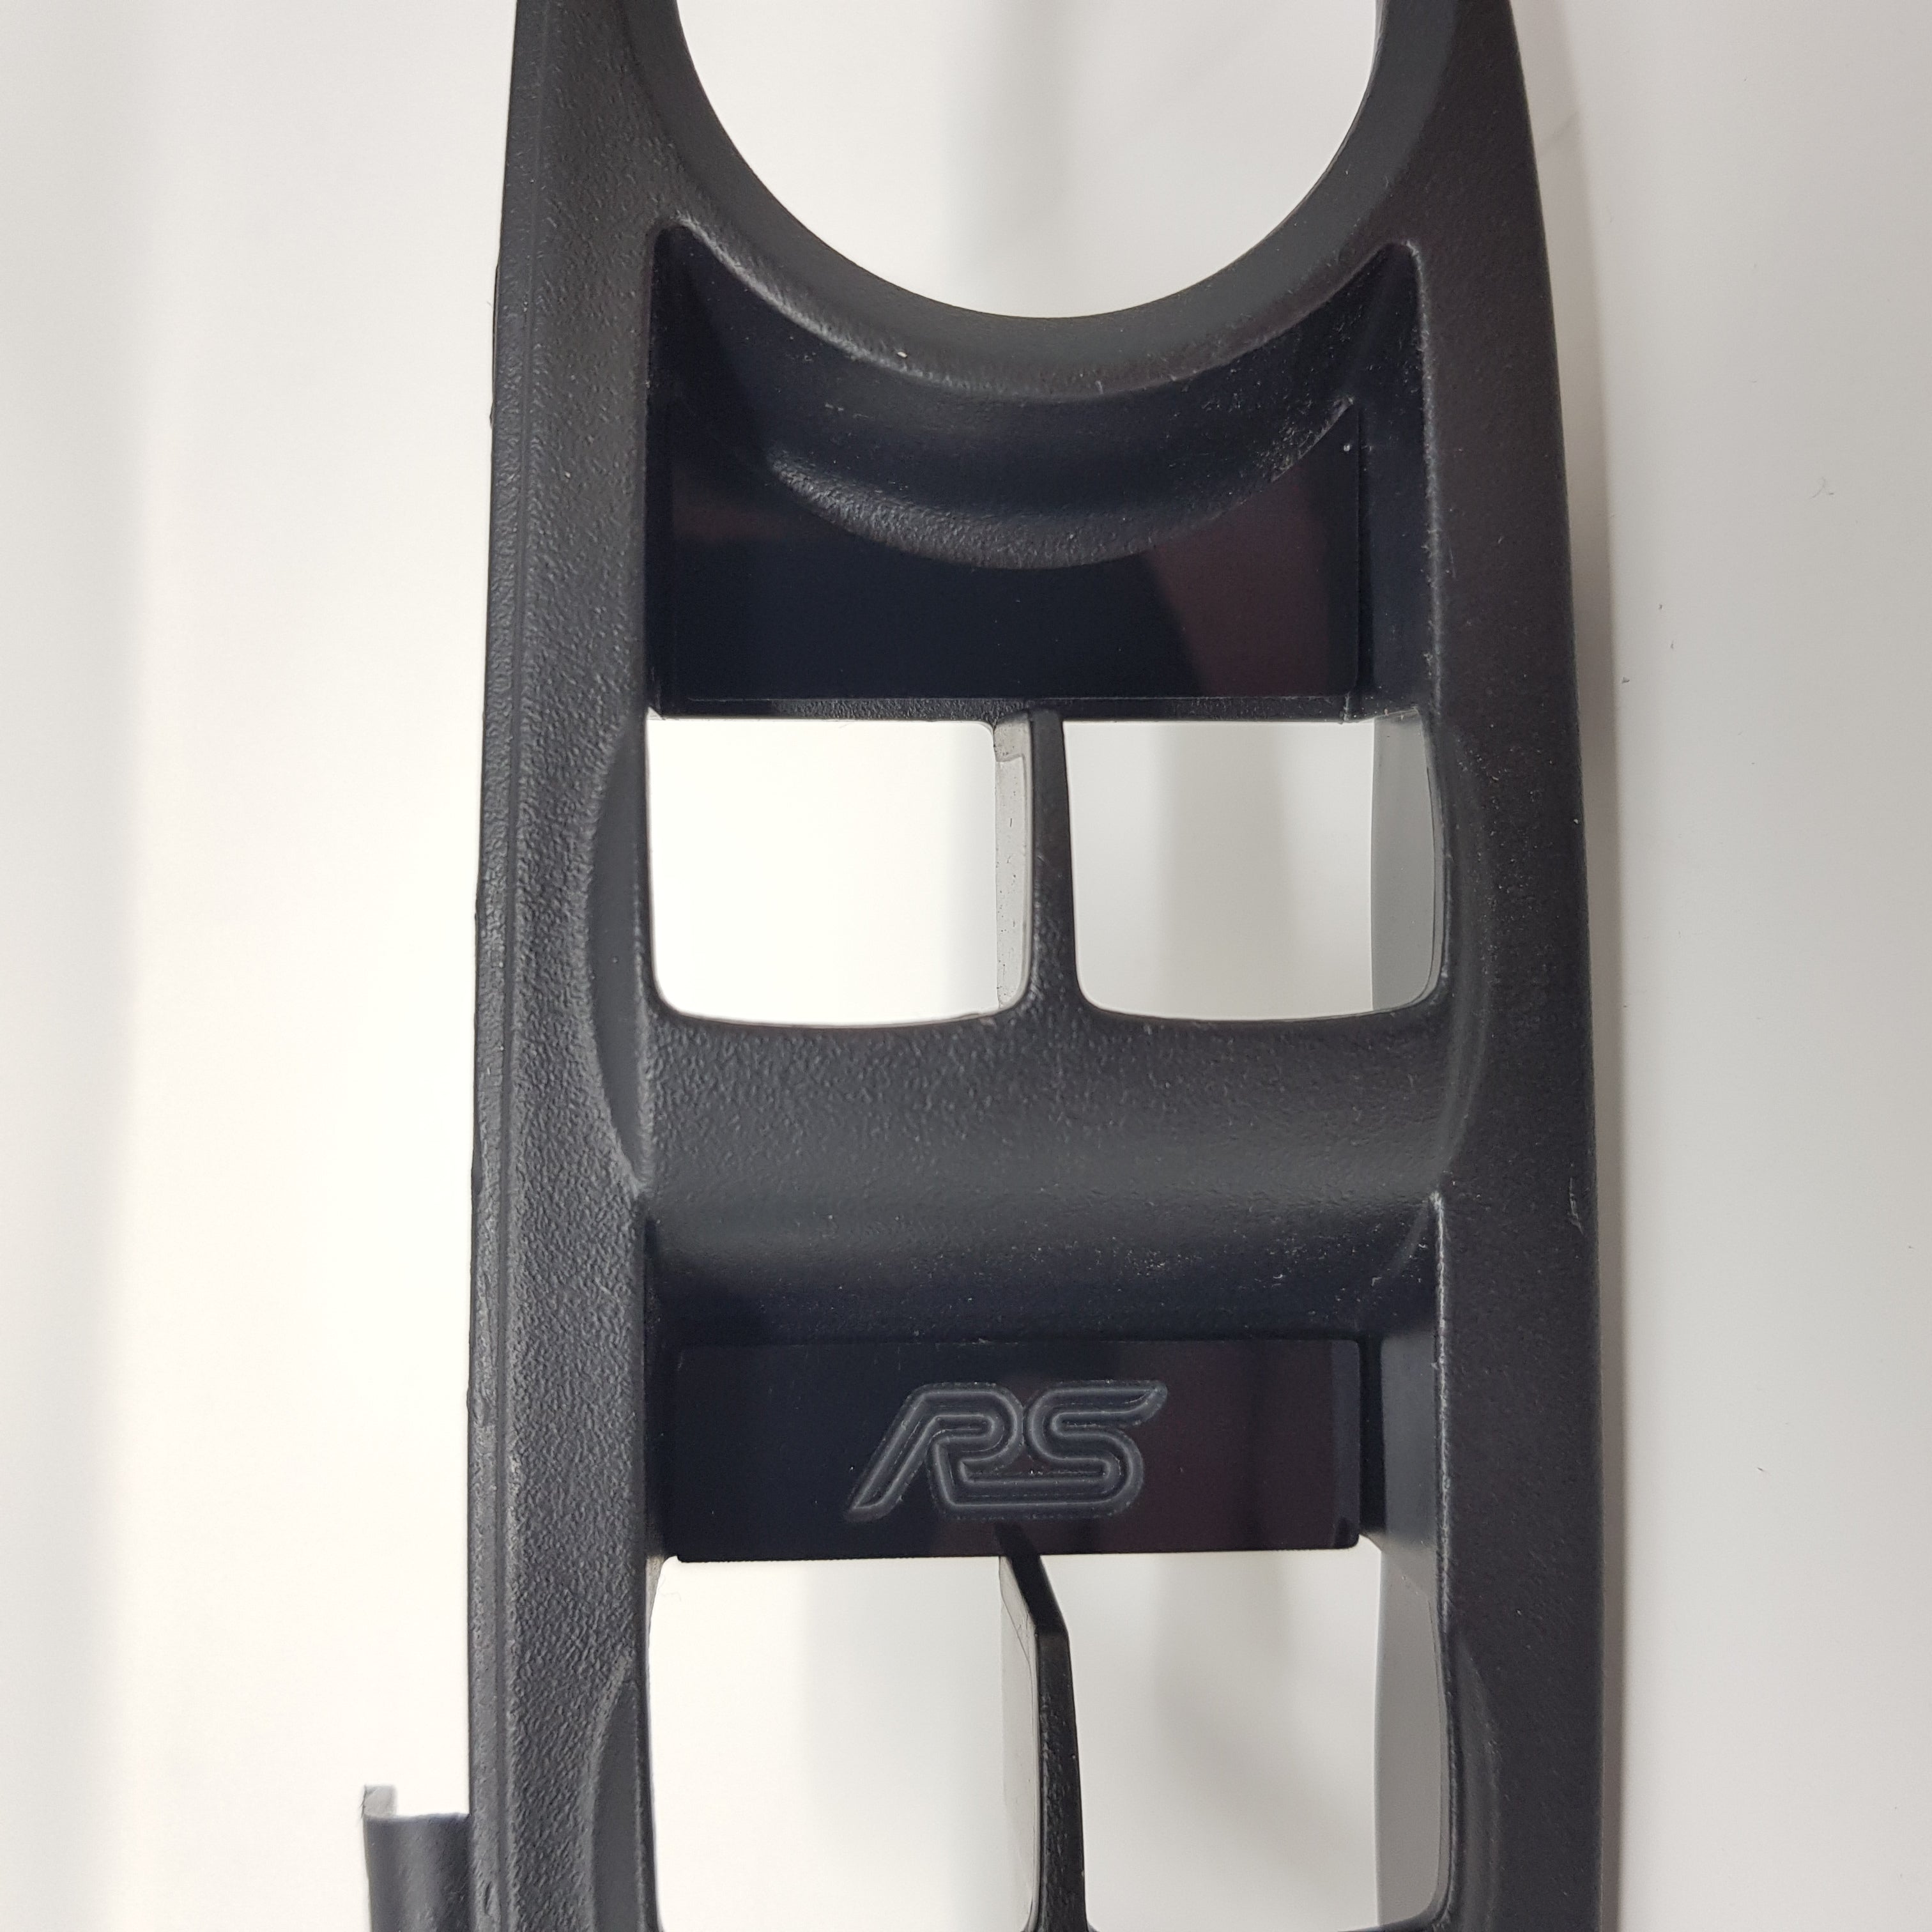 Mk3/3.5 Focus RS / ST Door Handle Inserts (Engraved)